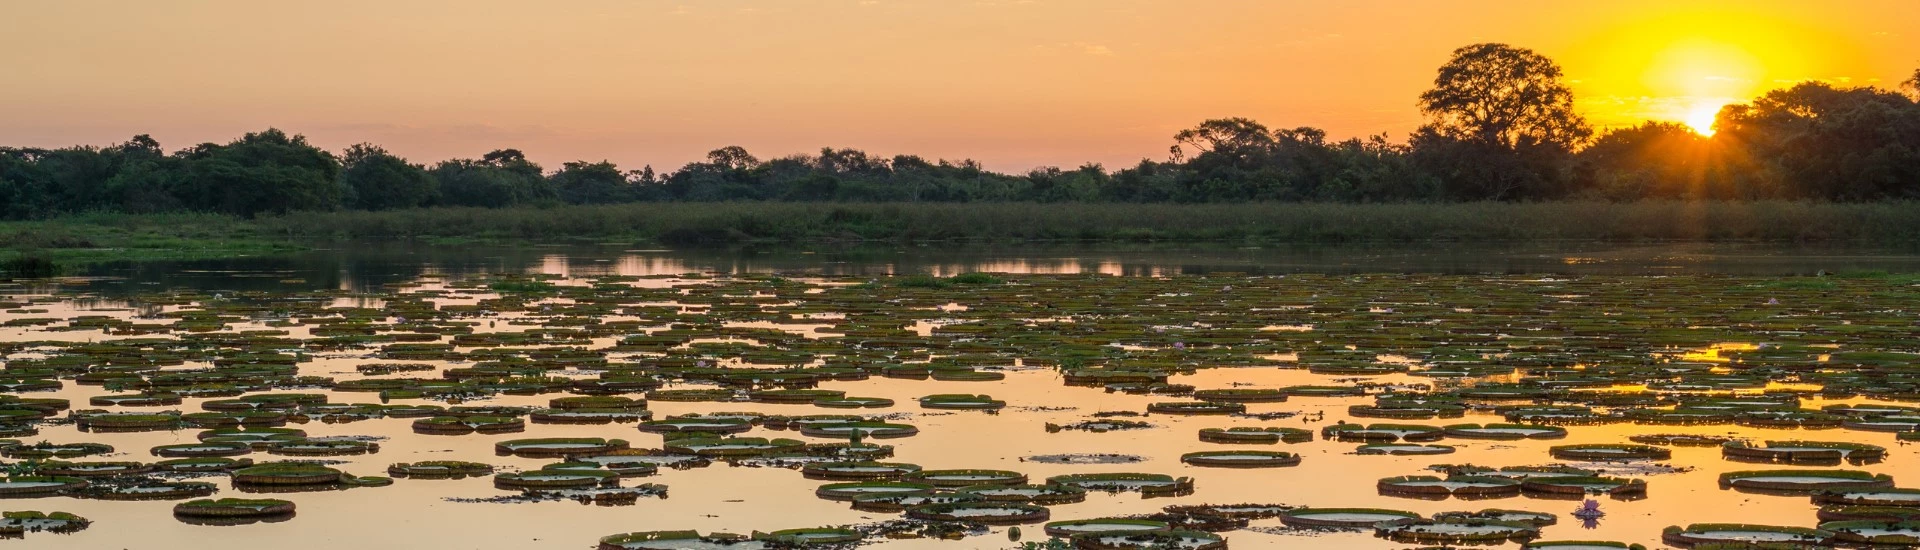 Pantanal, Brazil - Wetland Atlantic Rainforest